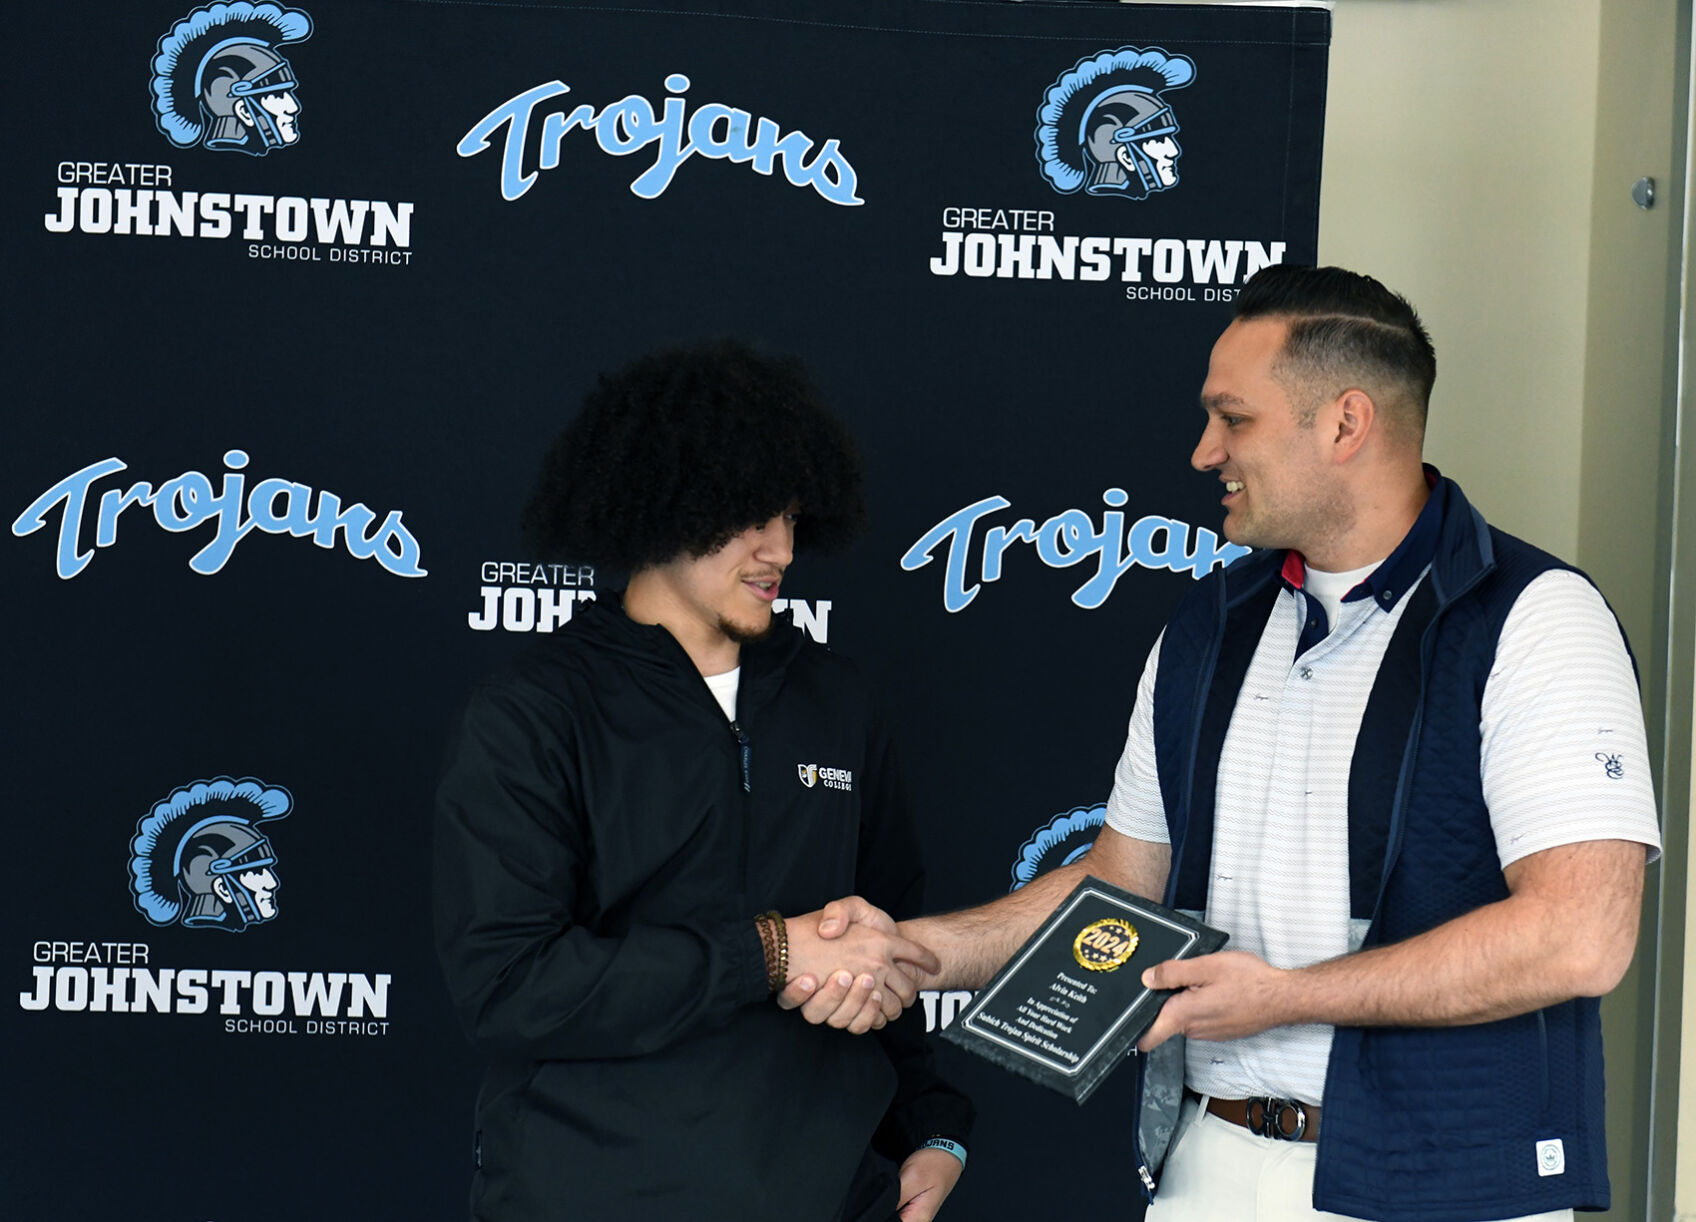 Trojan Spirit Scholarship Winner Receives $51,000 Donation for Alma Mater’s Football Program